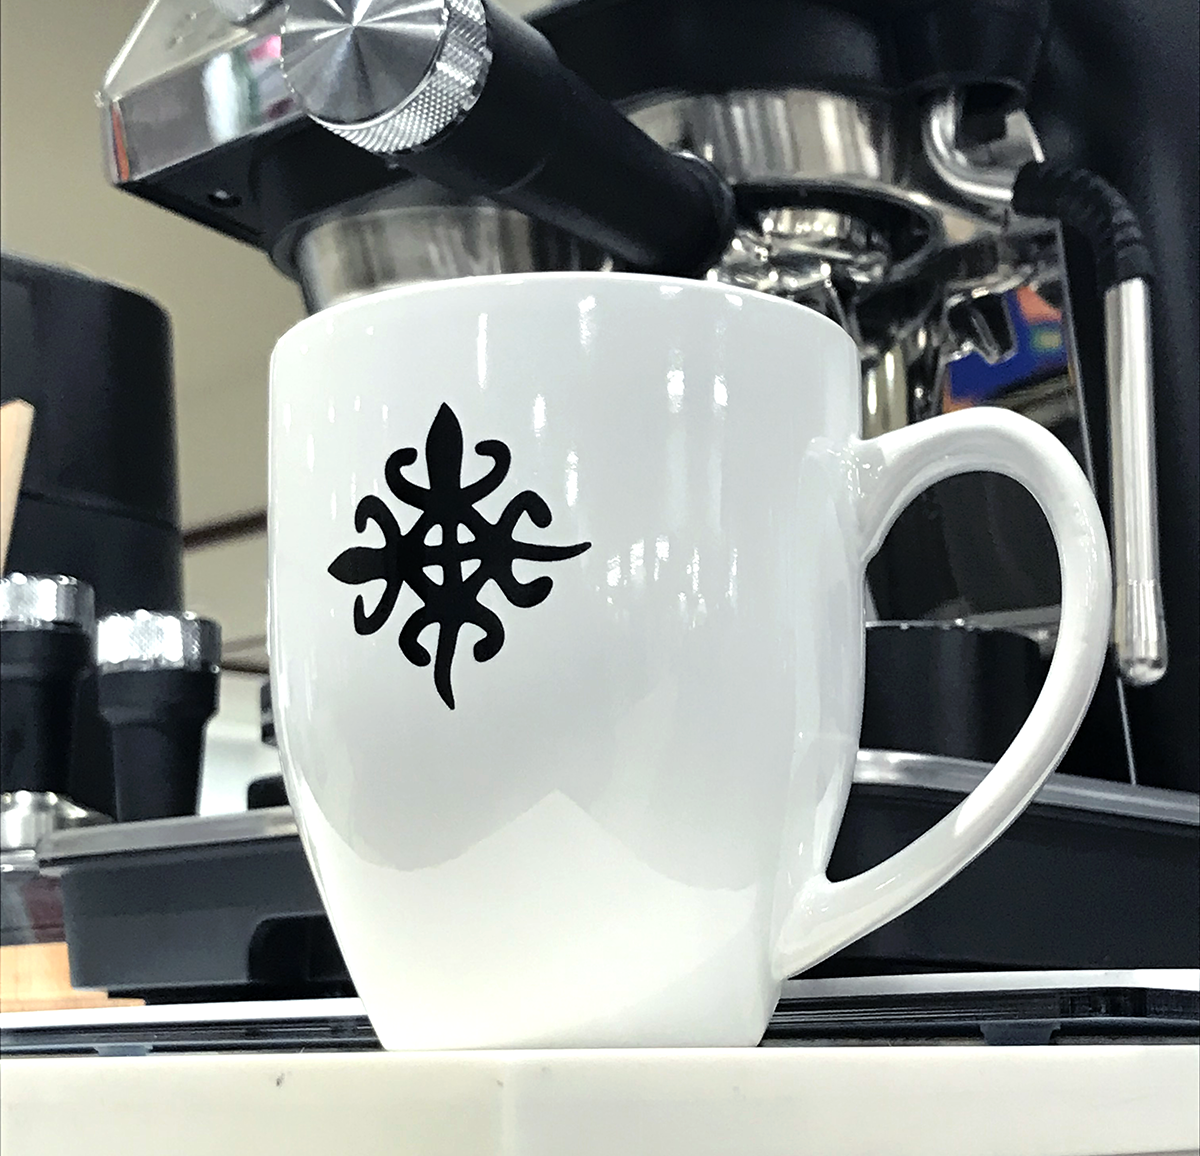 16 oz white coffee mug with black symbol on side